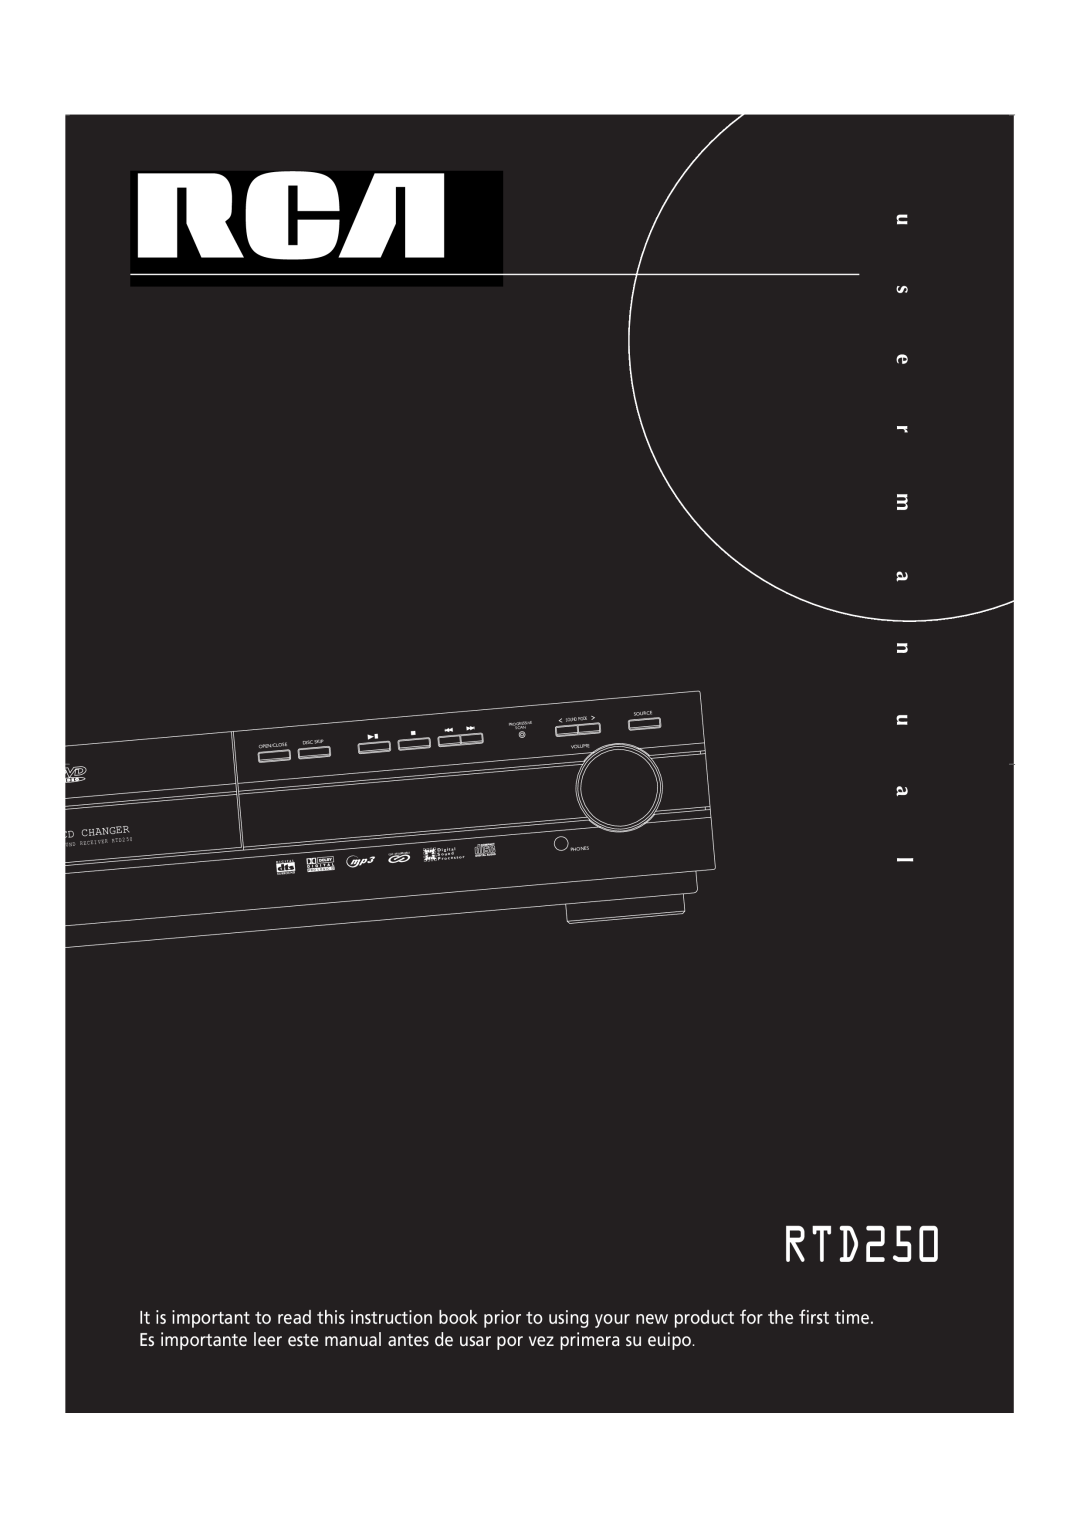 RCA RTD250 user manual u s e r m a n u a l, Changer, Source, Disc Skip, Open/Clo, Und Rec, Eiver, Volume, D i g i t a l 